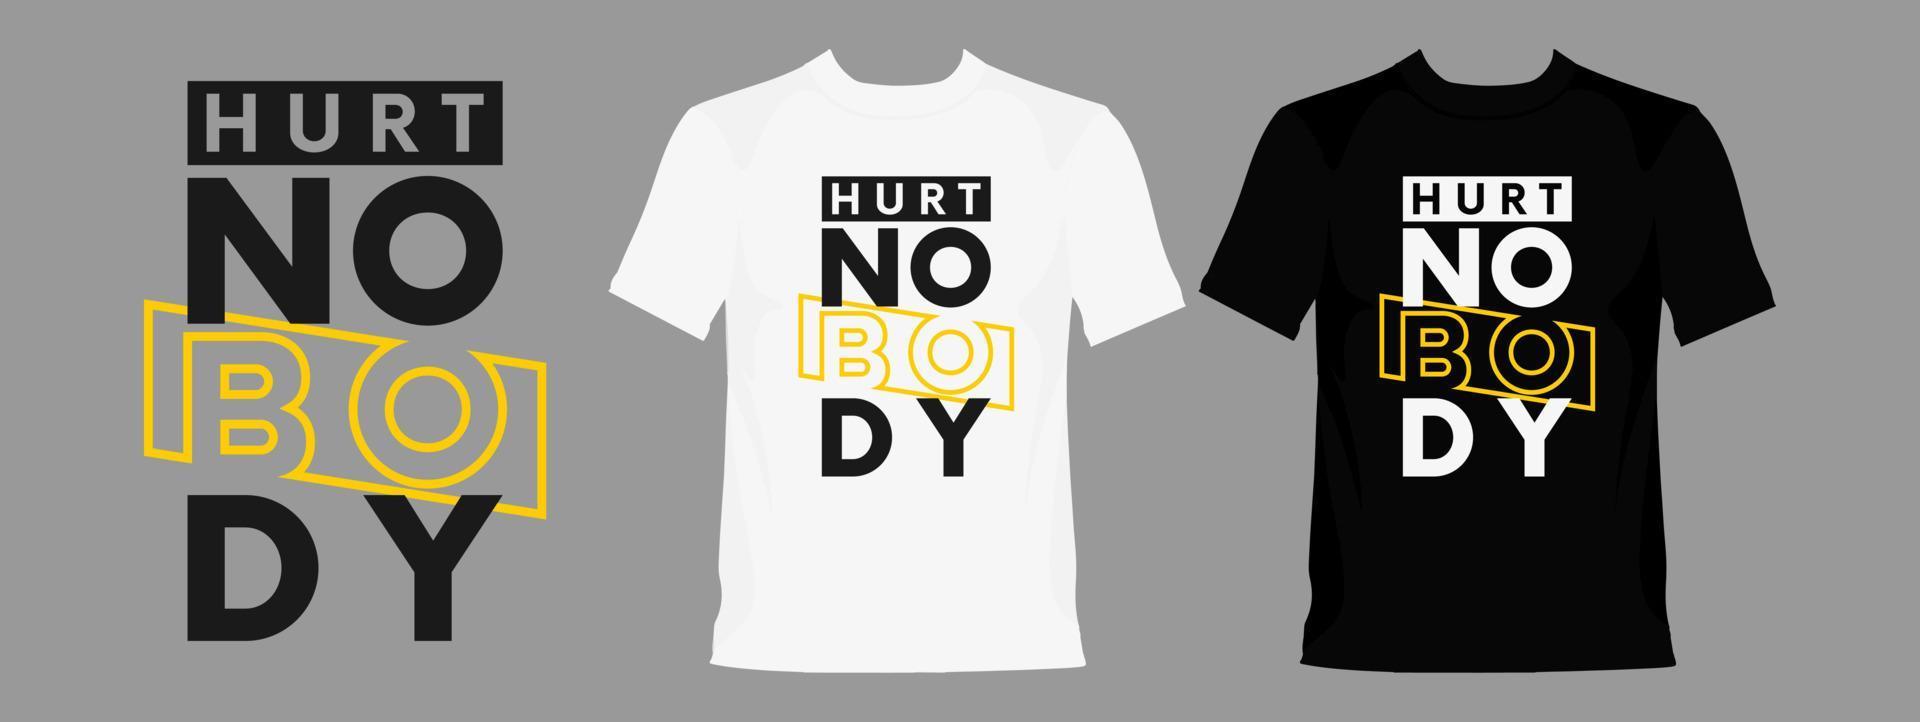 Hurt Nobody  typography graphic design, for t-shirt prints, vector illustration